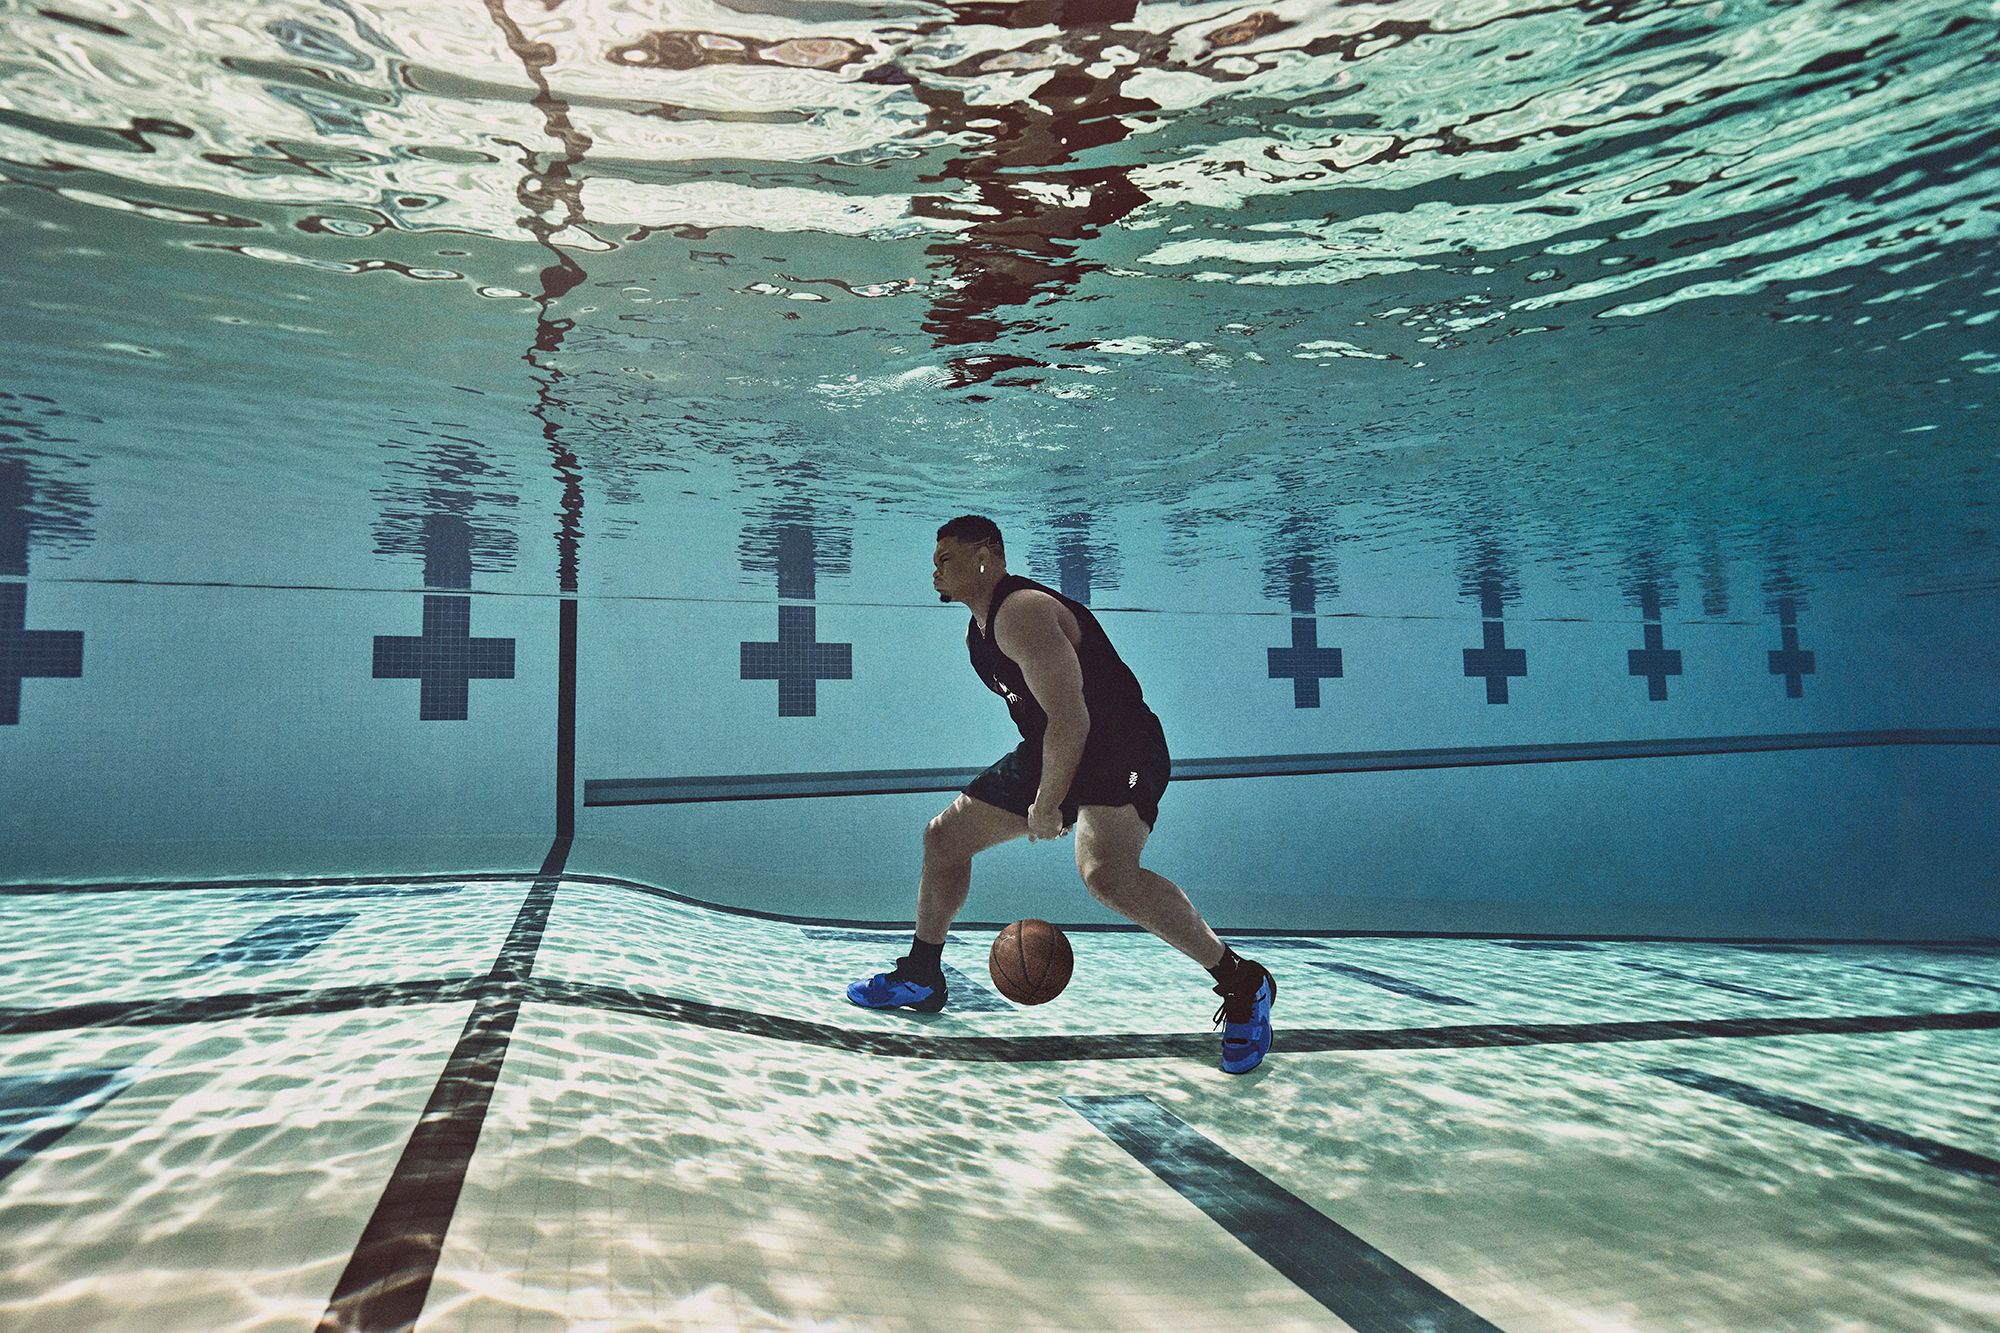 Zion Williamson dribbling basketball underwater in swimming pool